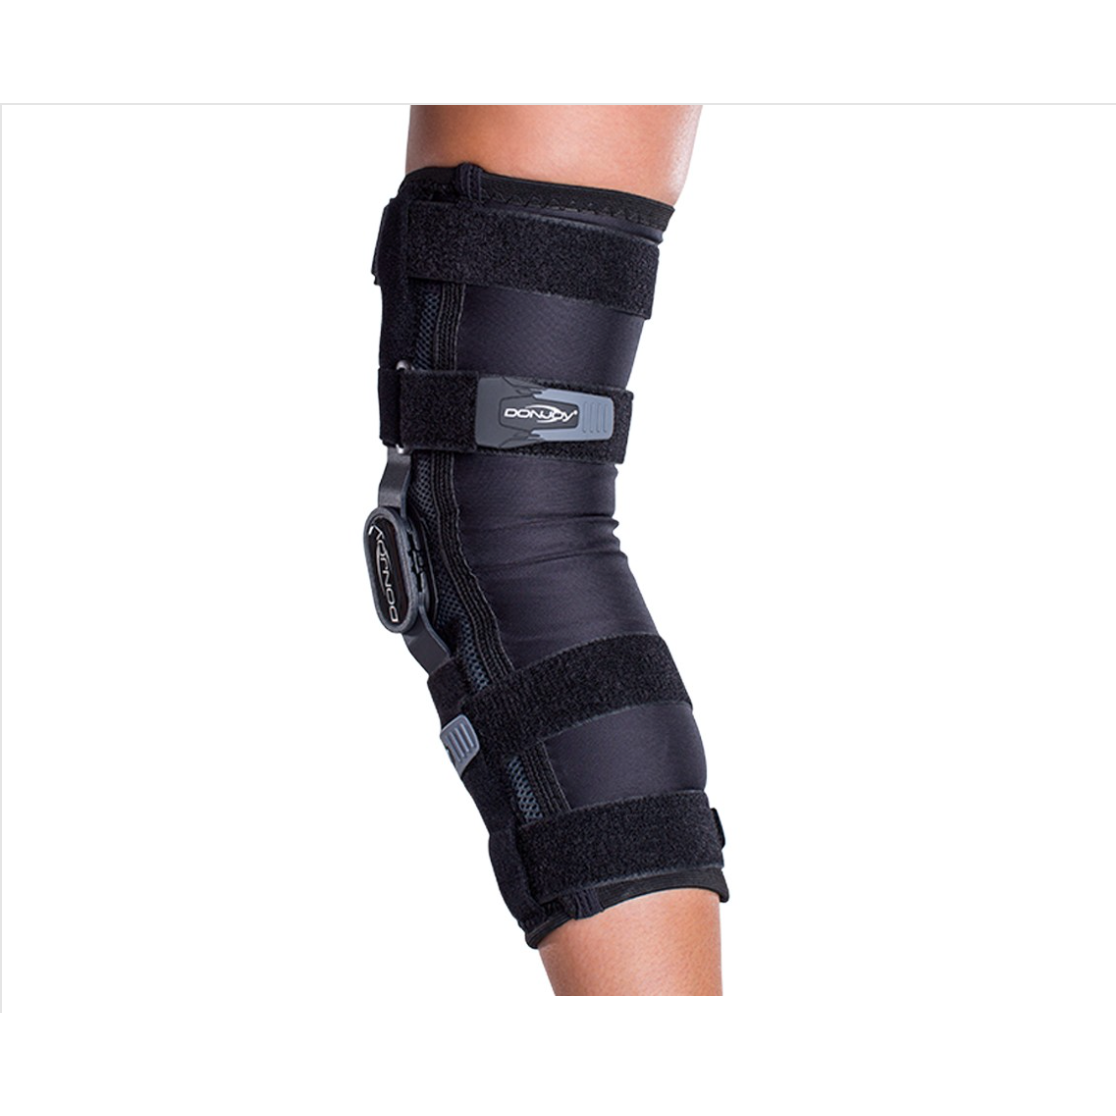 Wrap Around Hinged Knee Brace by Advanced Orthopaedics : Knee Brace